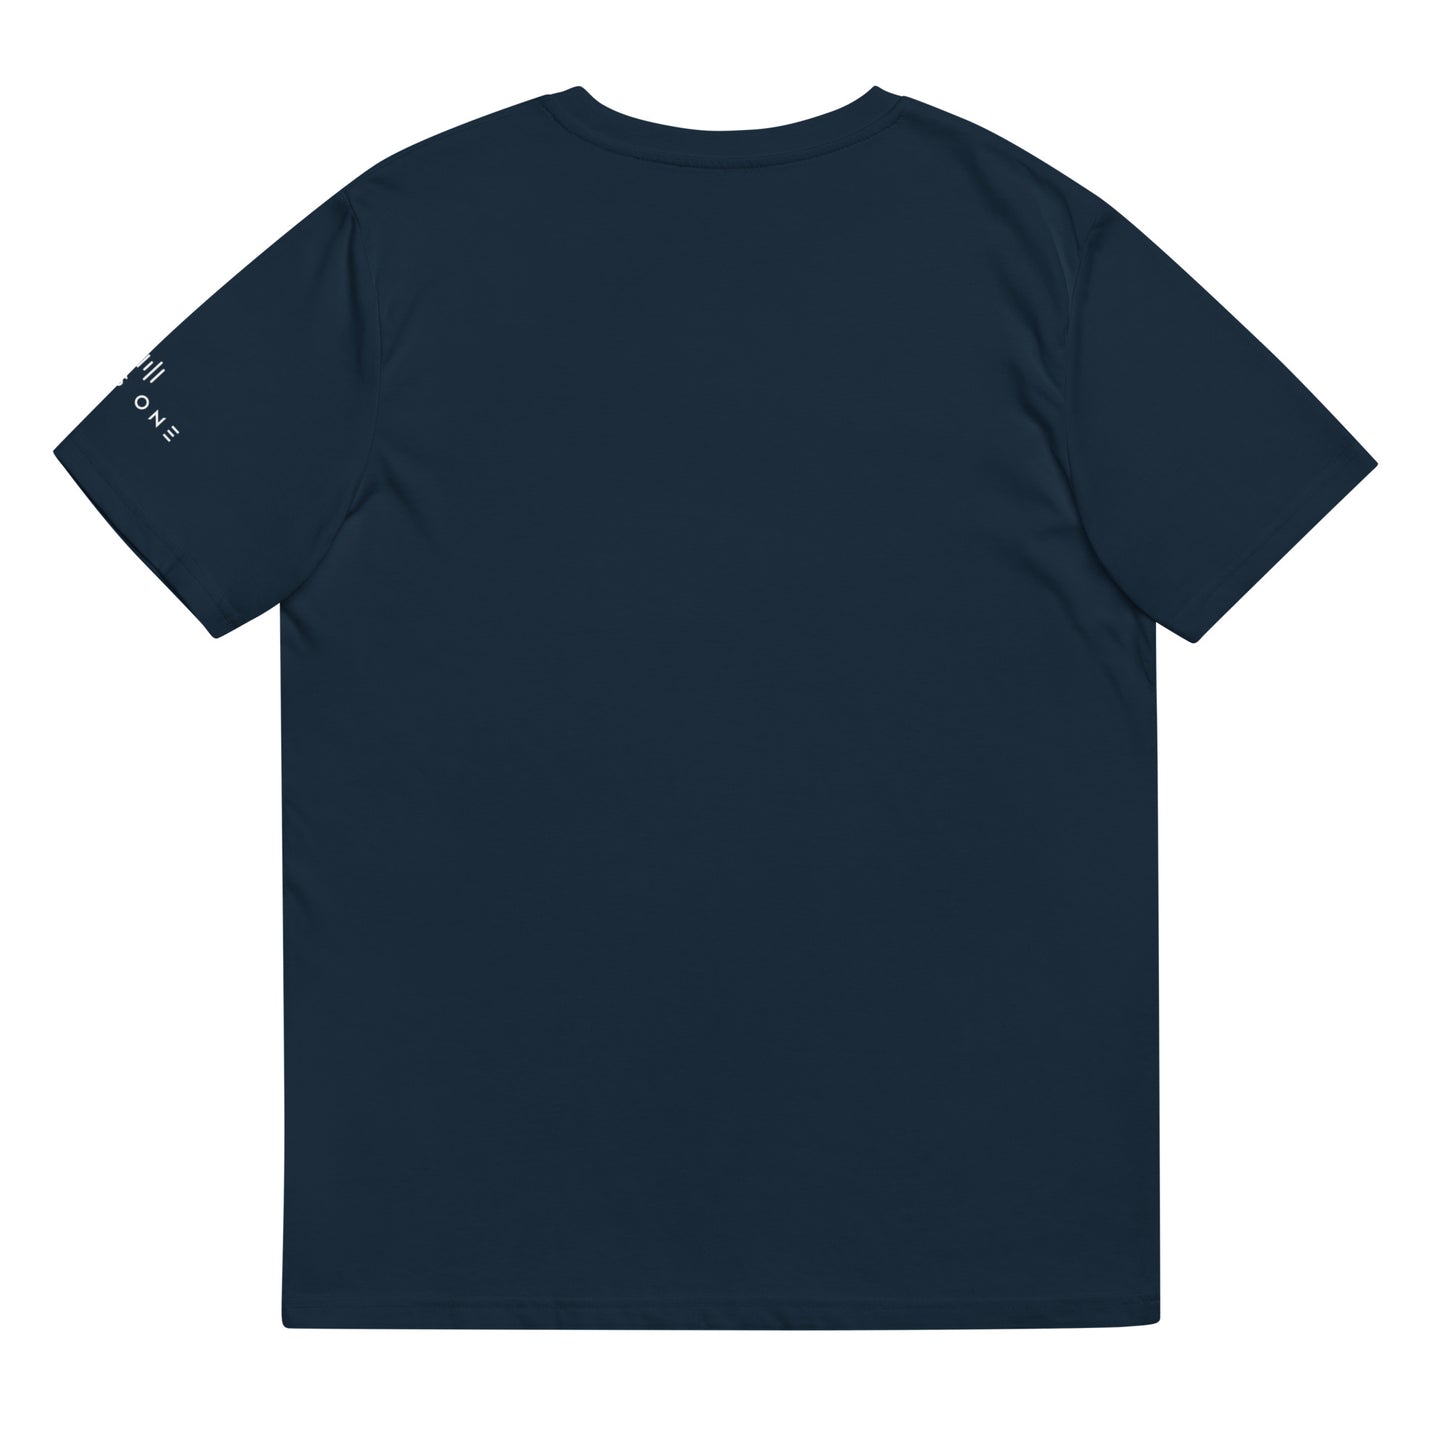 Prototype (v1) Unisex organic cotton t-shirt (White Text)